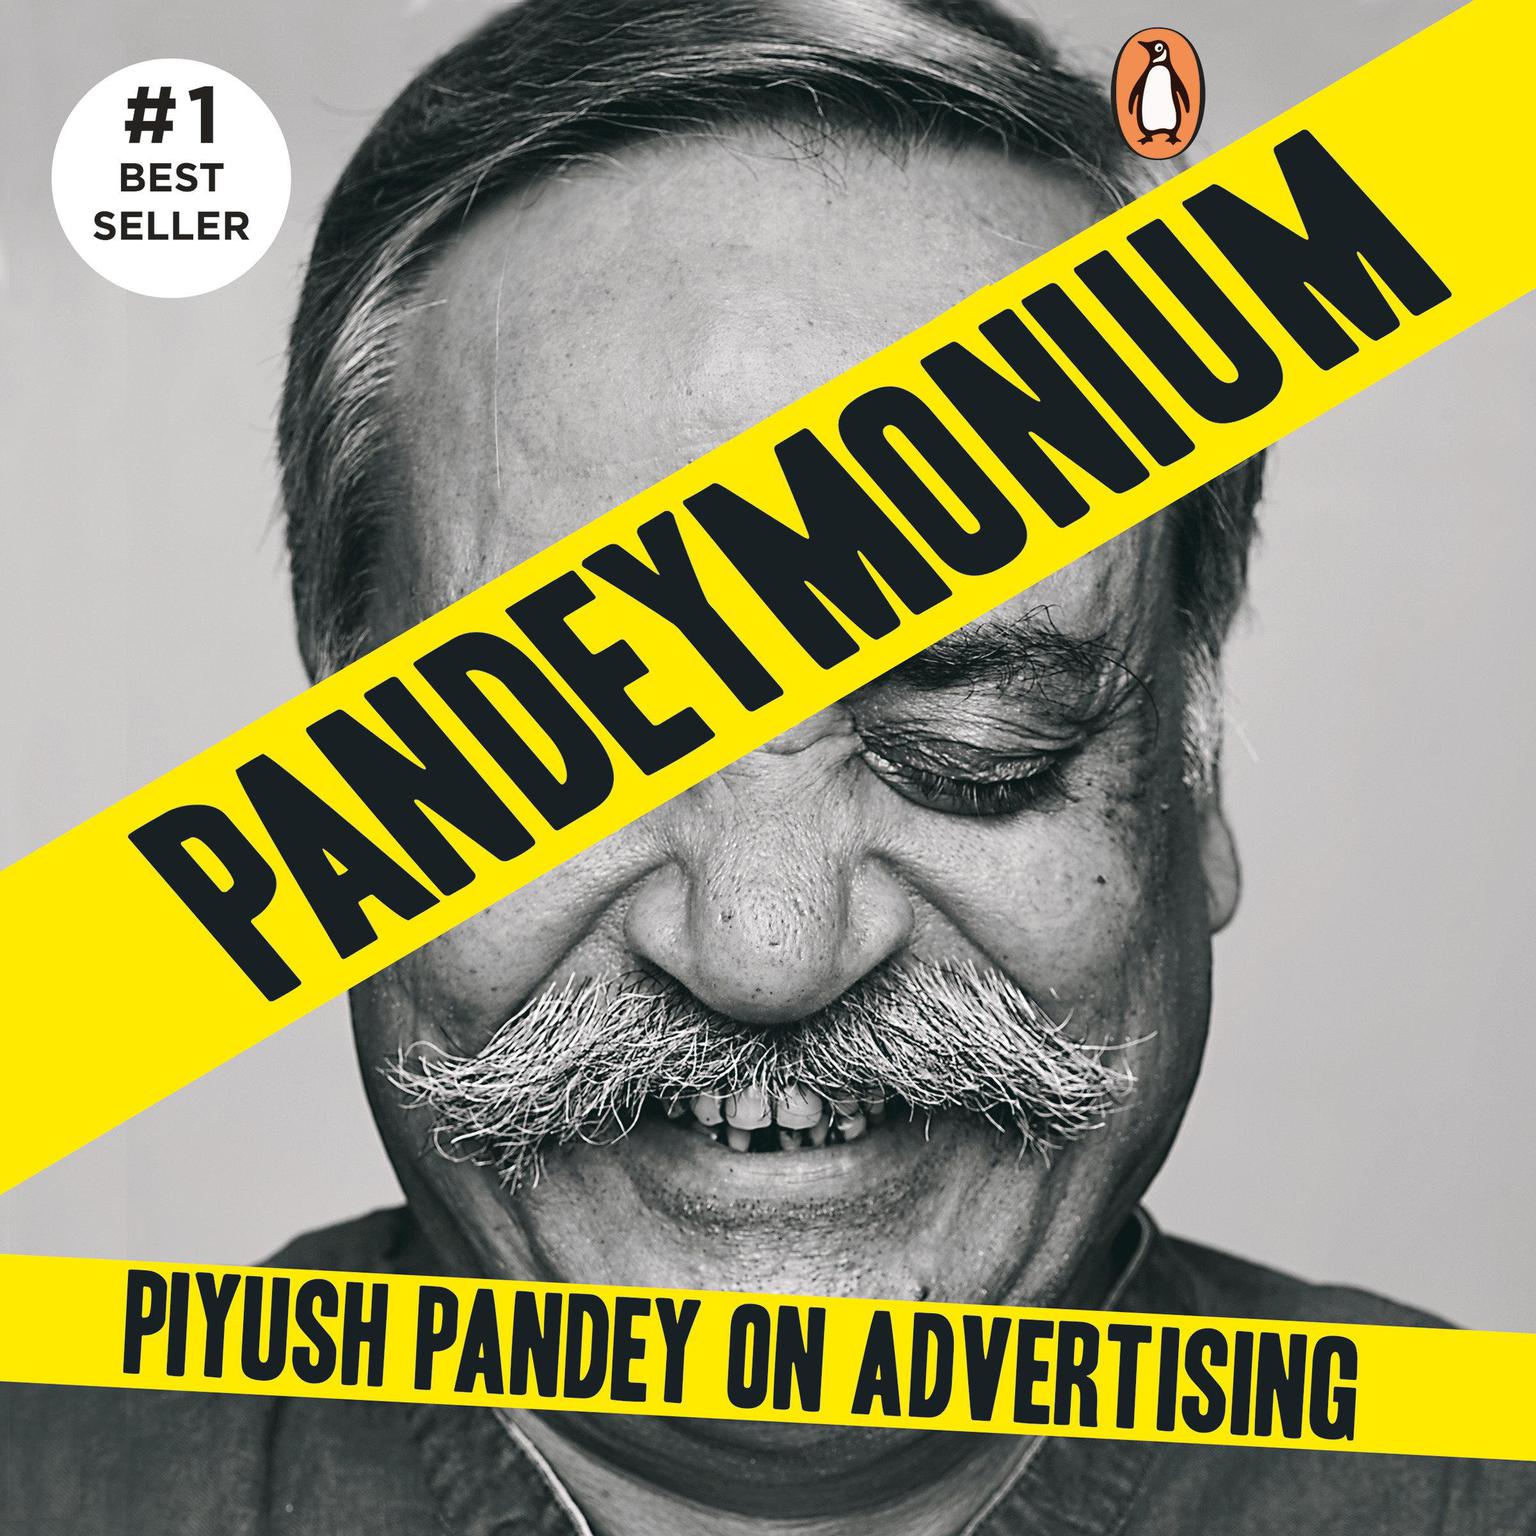 Pandeymonium: Piyush Pandey On Advertising Audiobook, by Piyush Pandey